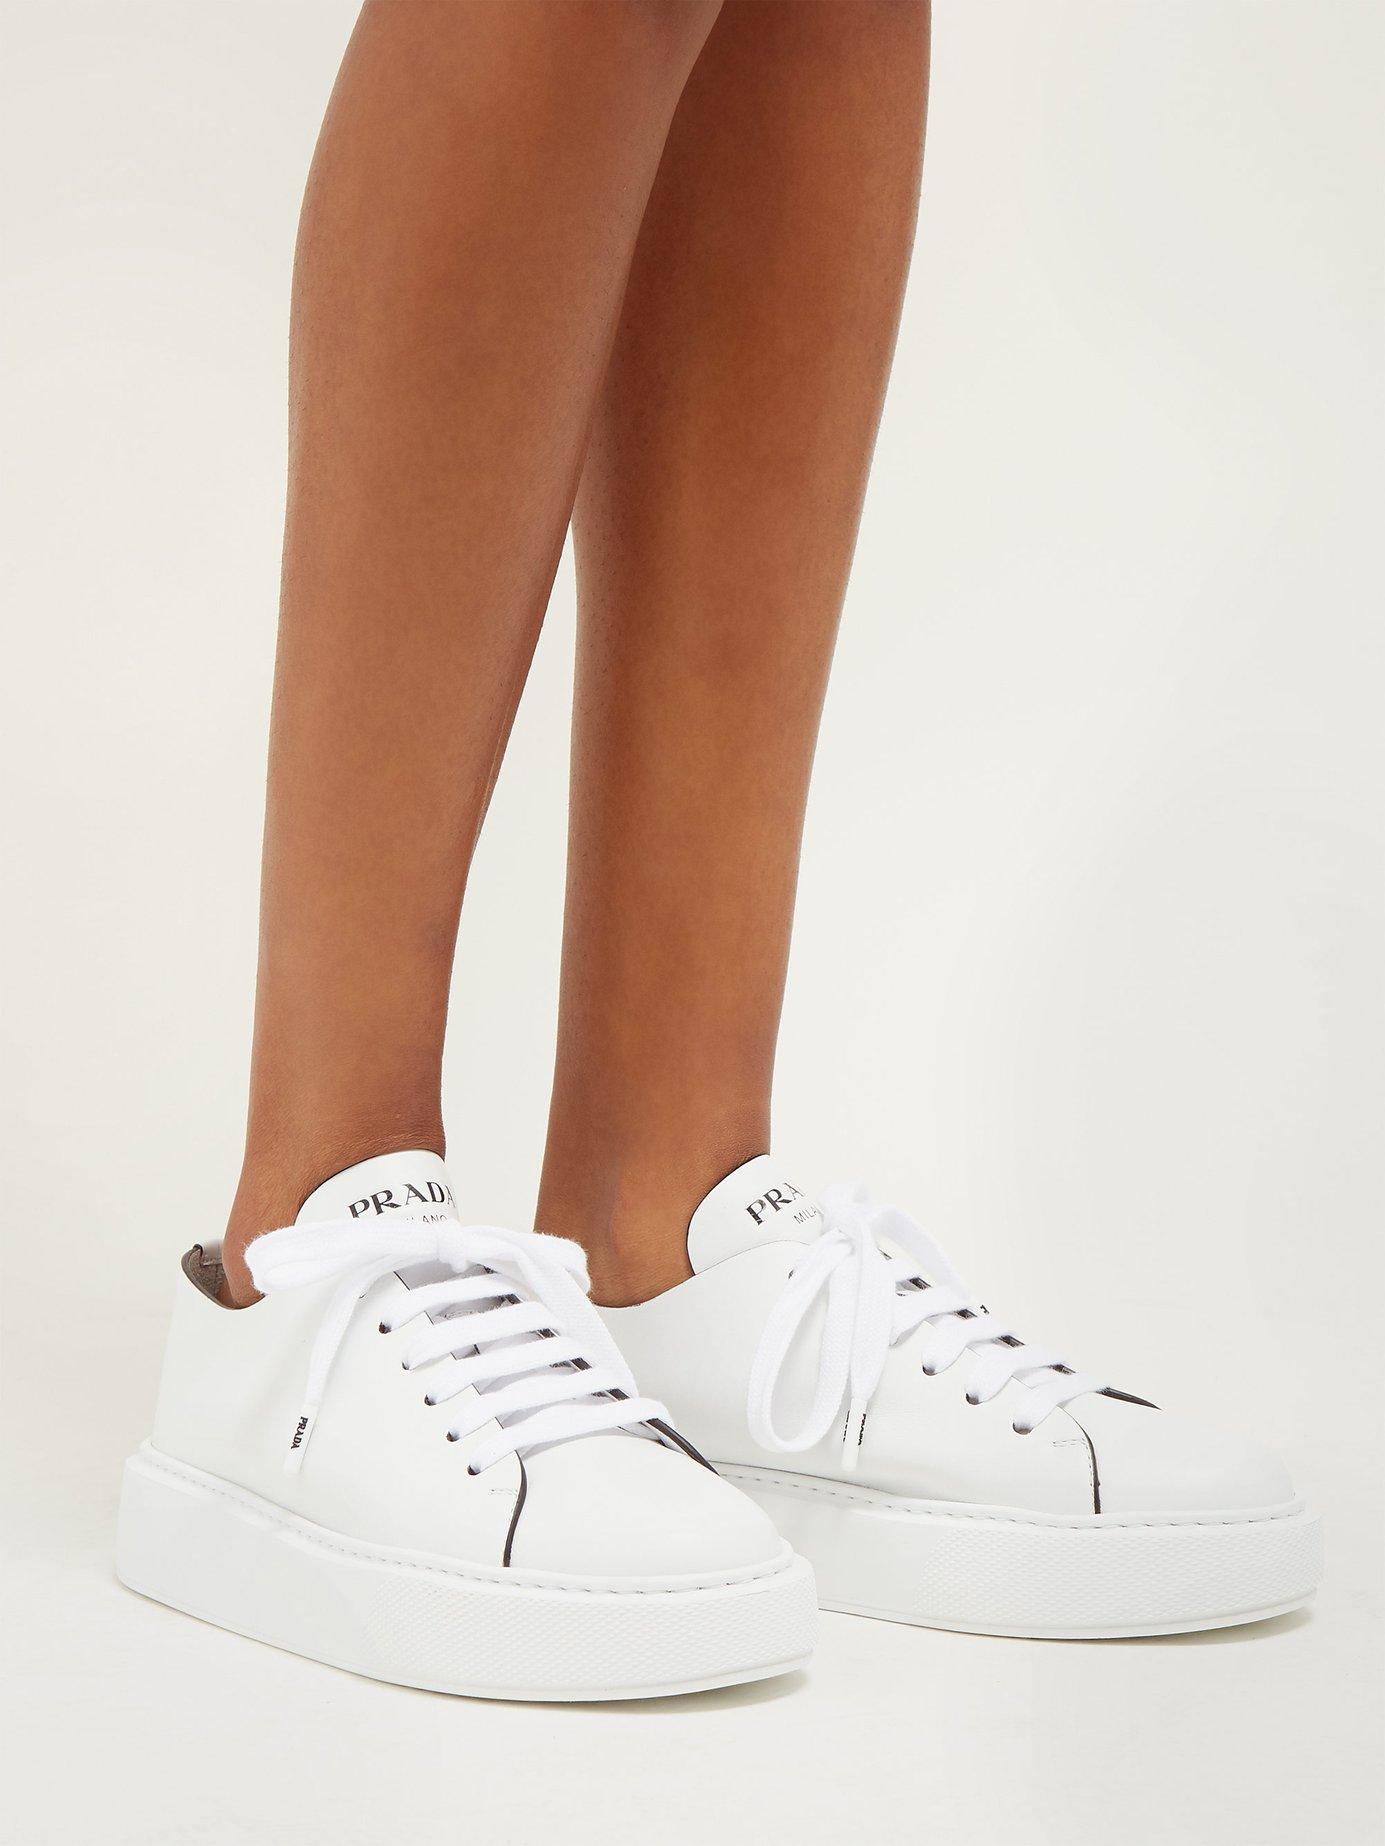 Prada Low-top Sneakers in White | Lyst